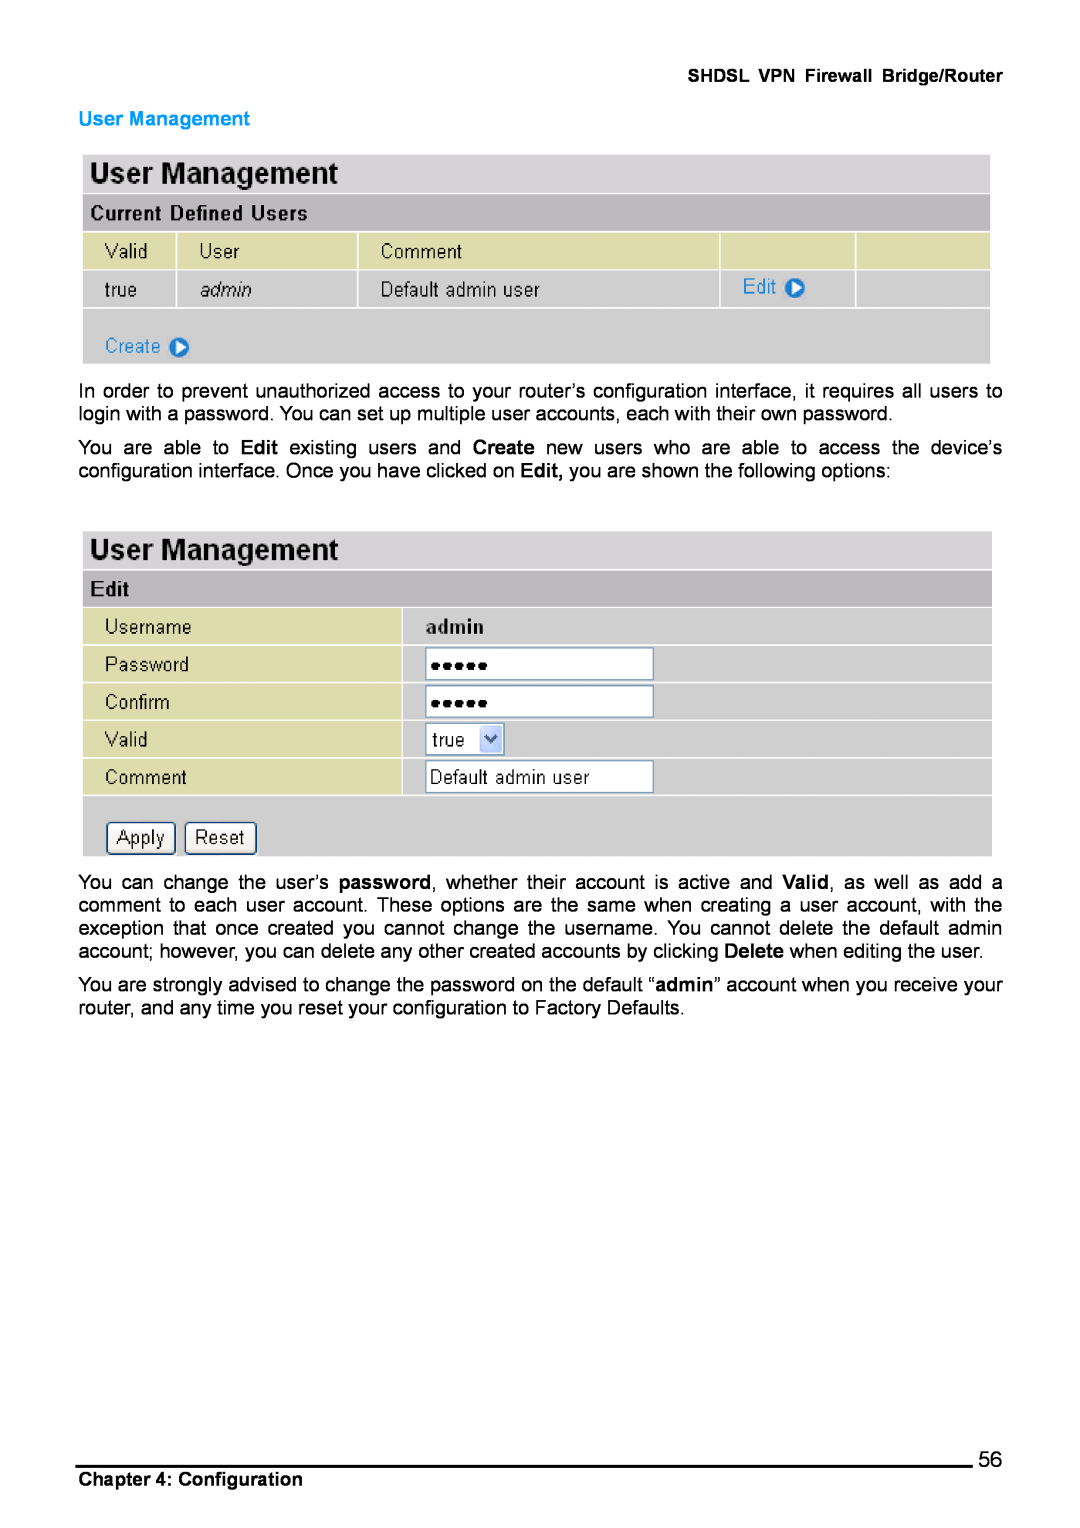 Billion Electric Company 8501 user manual User Management 